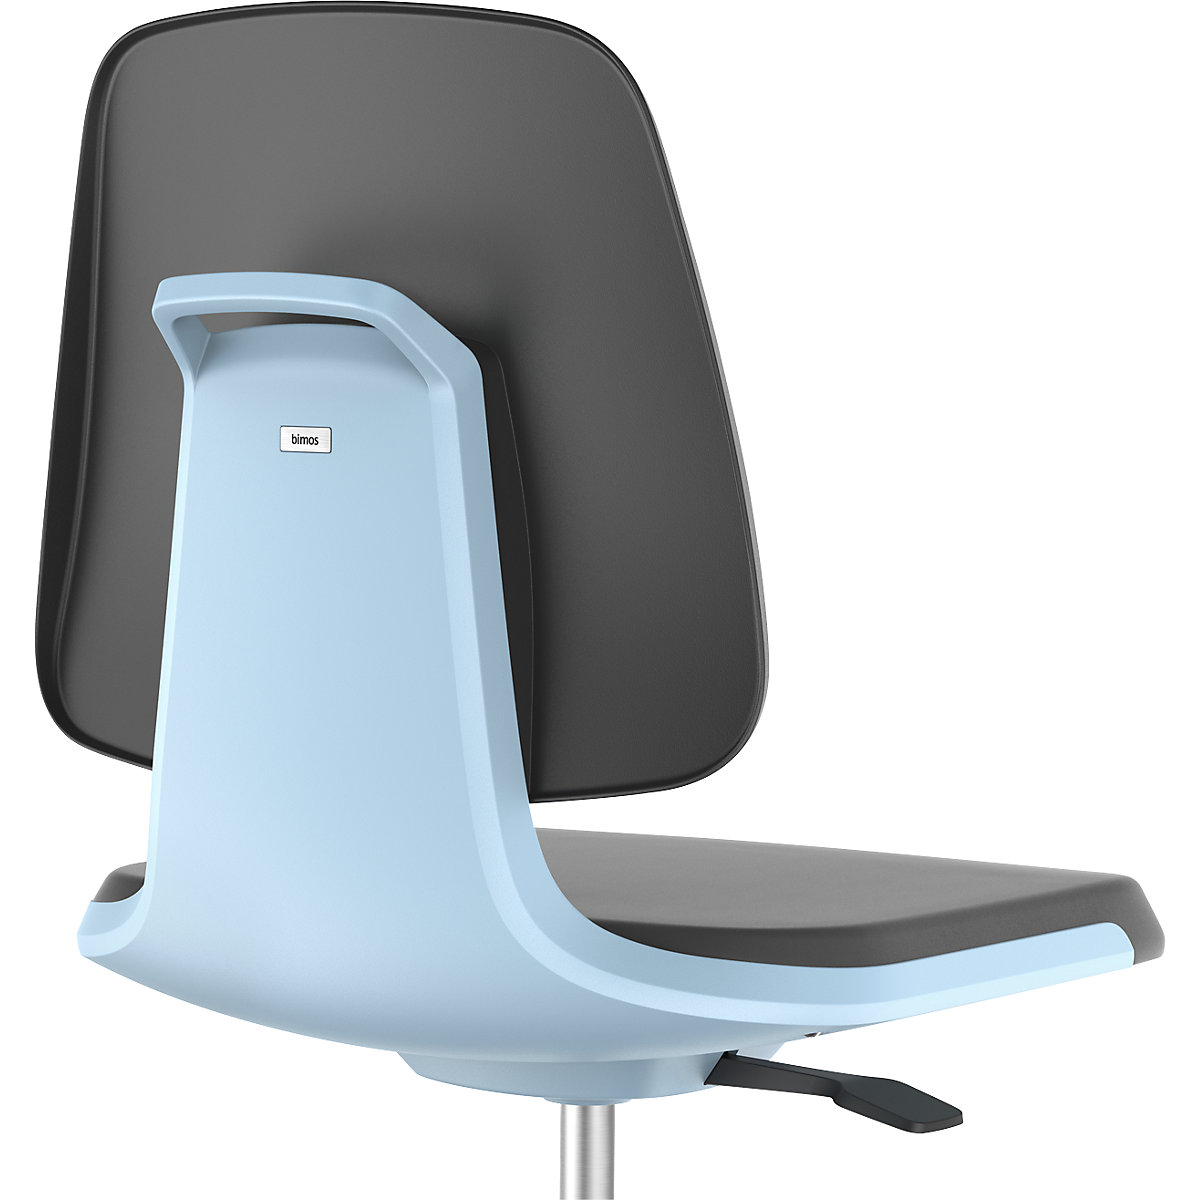 Radna okretna stolica LABSIT – bimos (Prikaz proizvoda 4)-3